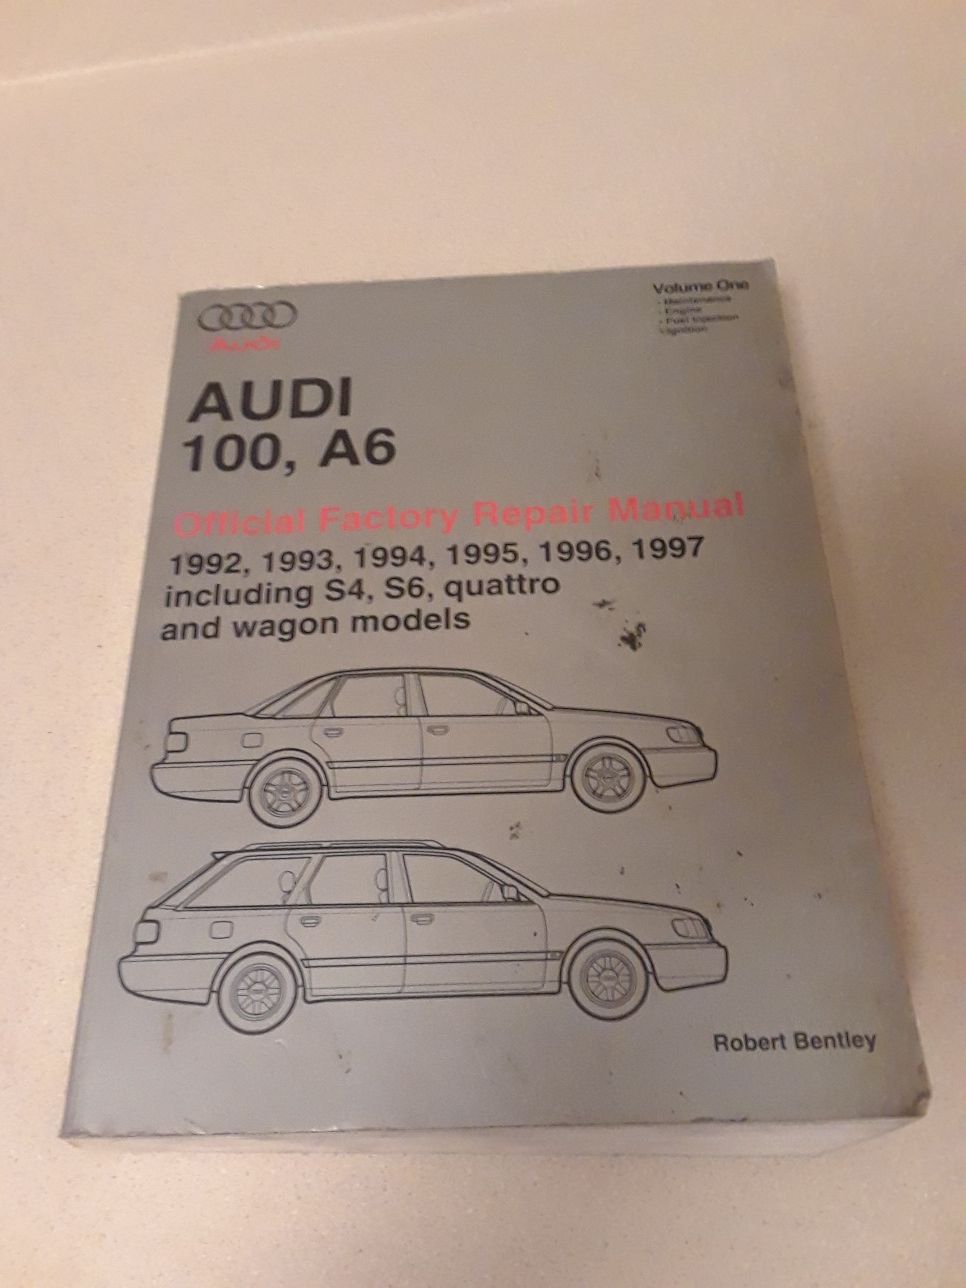 1992-1997 Audi 100, A6 factory service manual